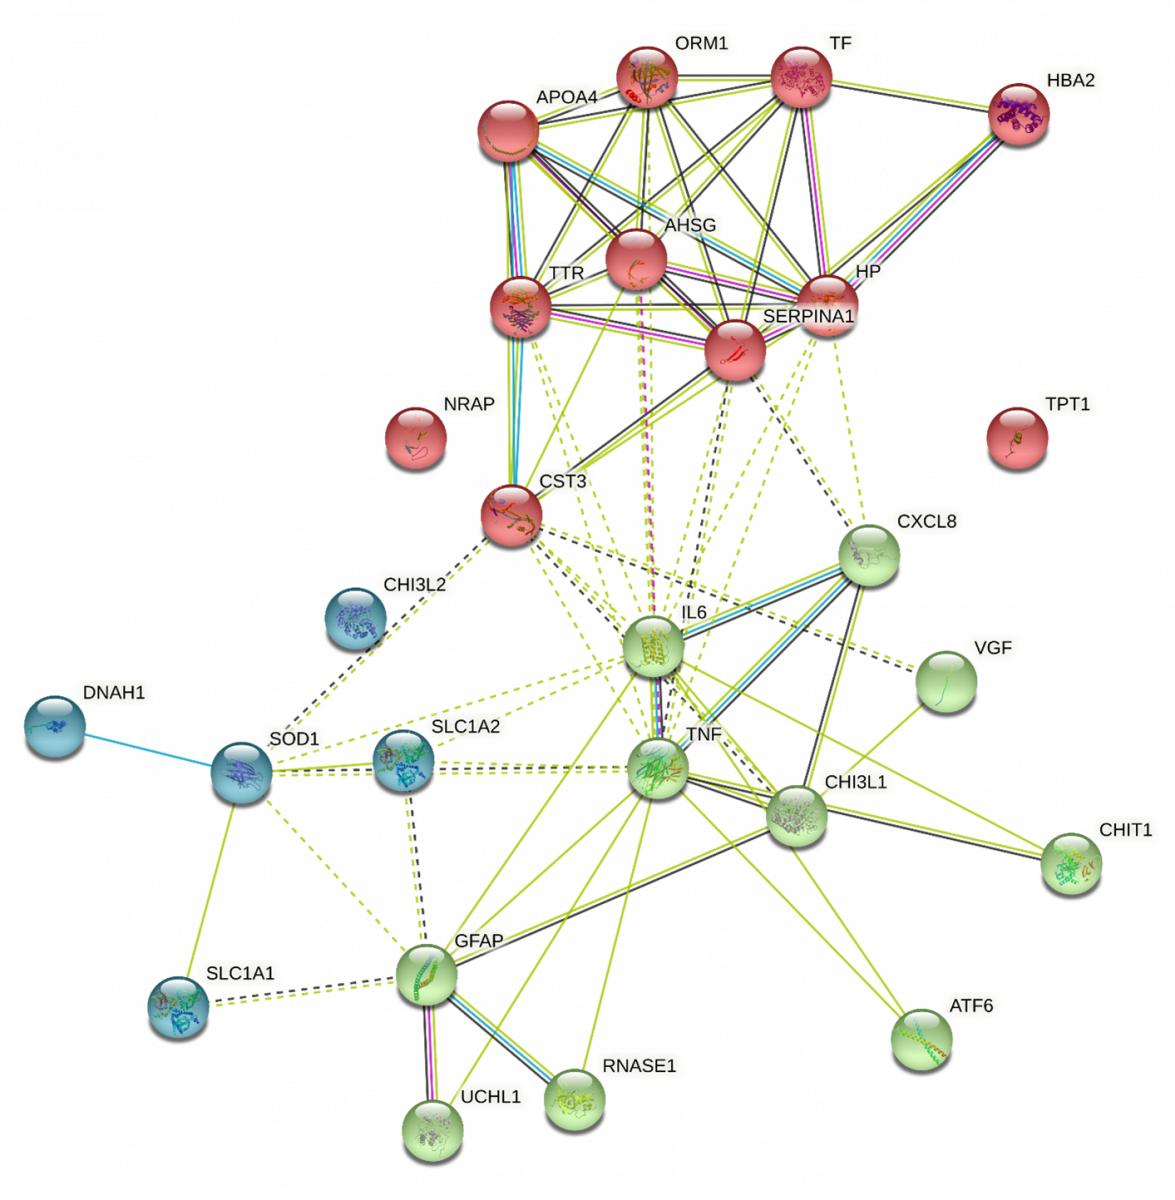 Molecular Networks